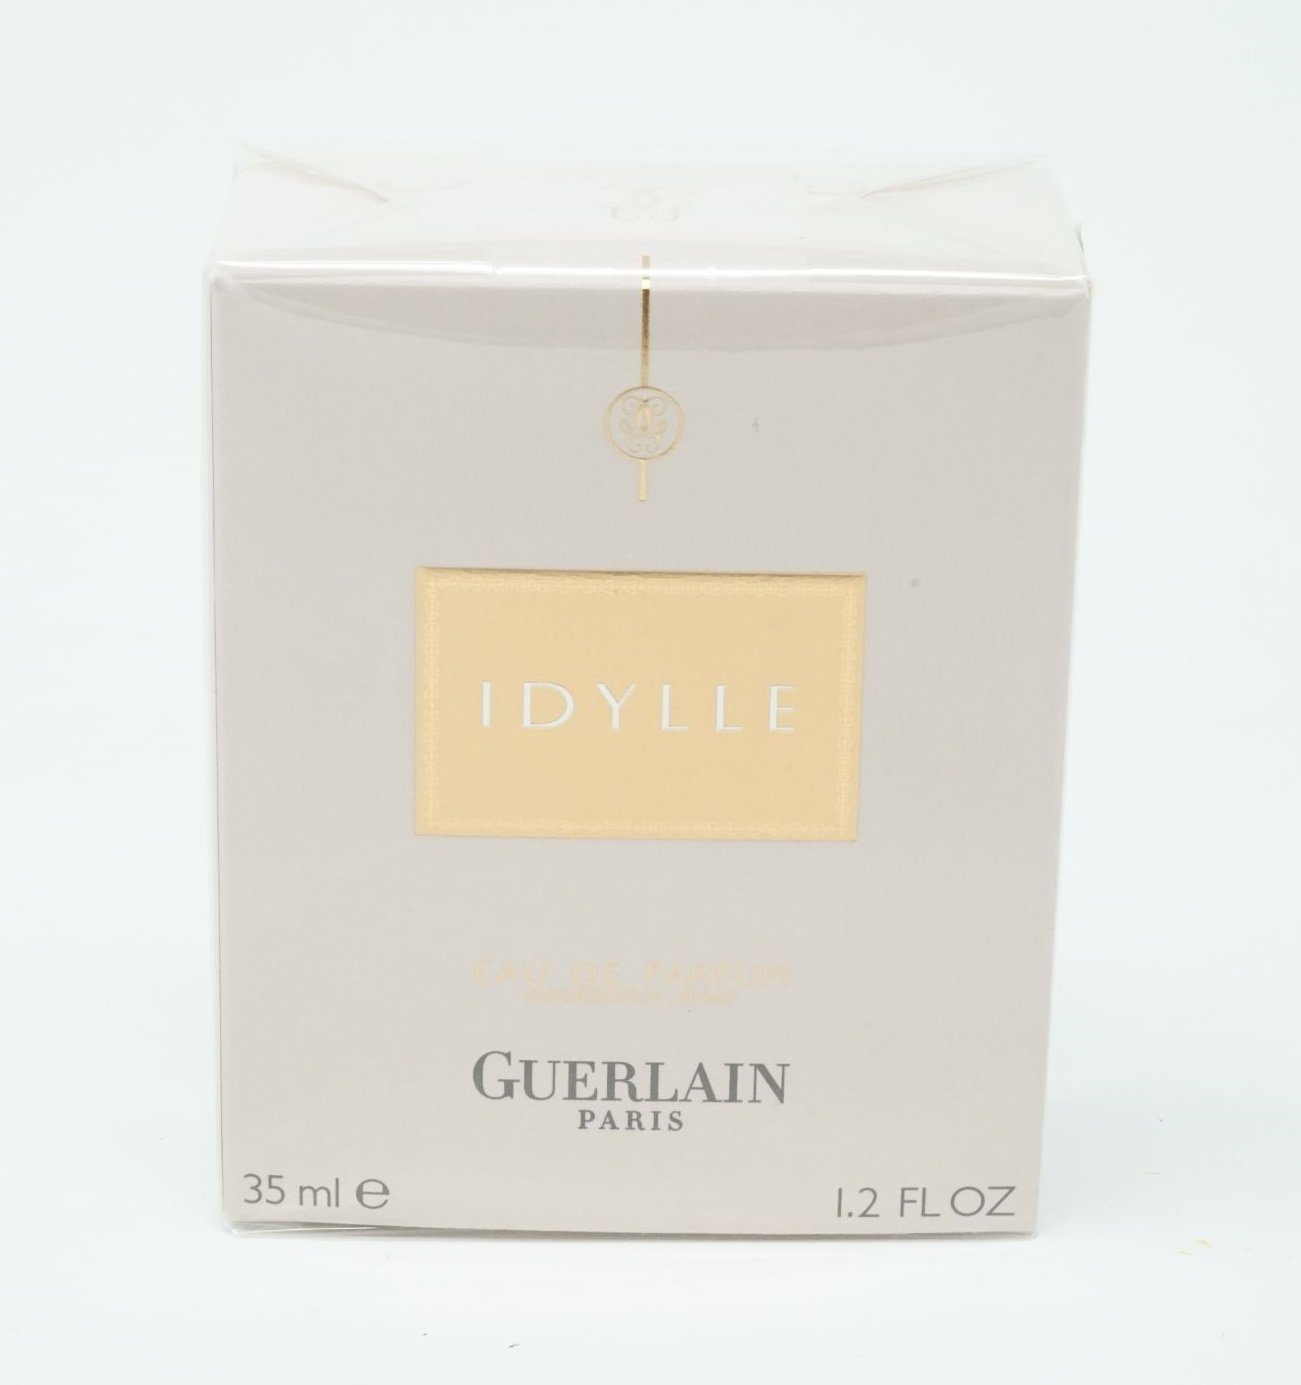 De GUERLAIN Guerlain Parfum Idylle de 35ml Spray Parfum Eau Eau